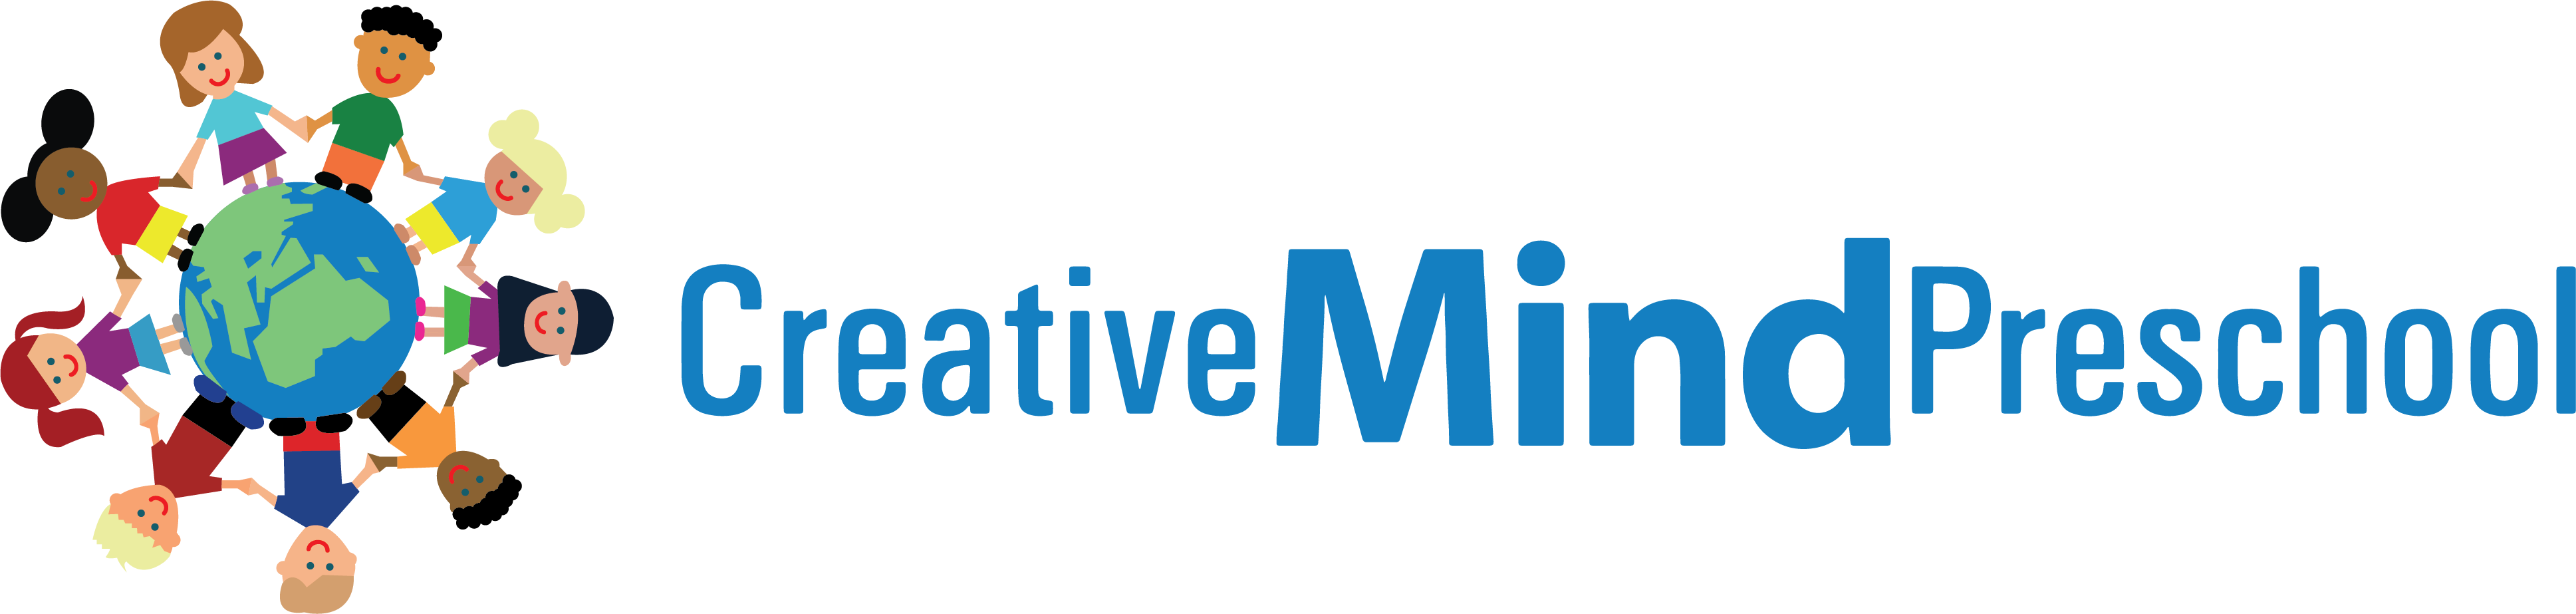 Creative Mind Preschool Logo